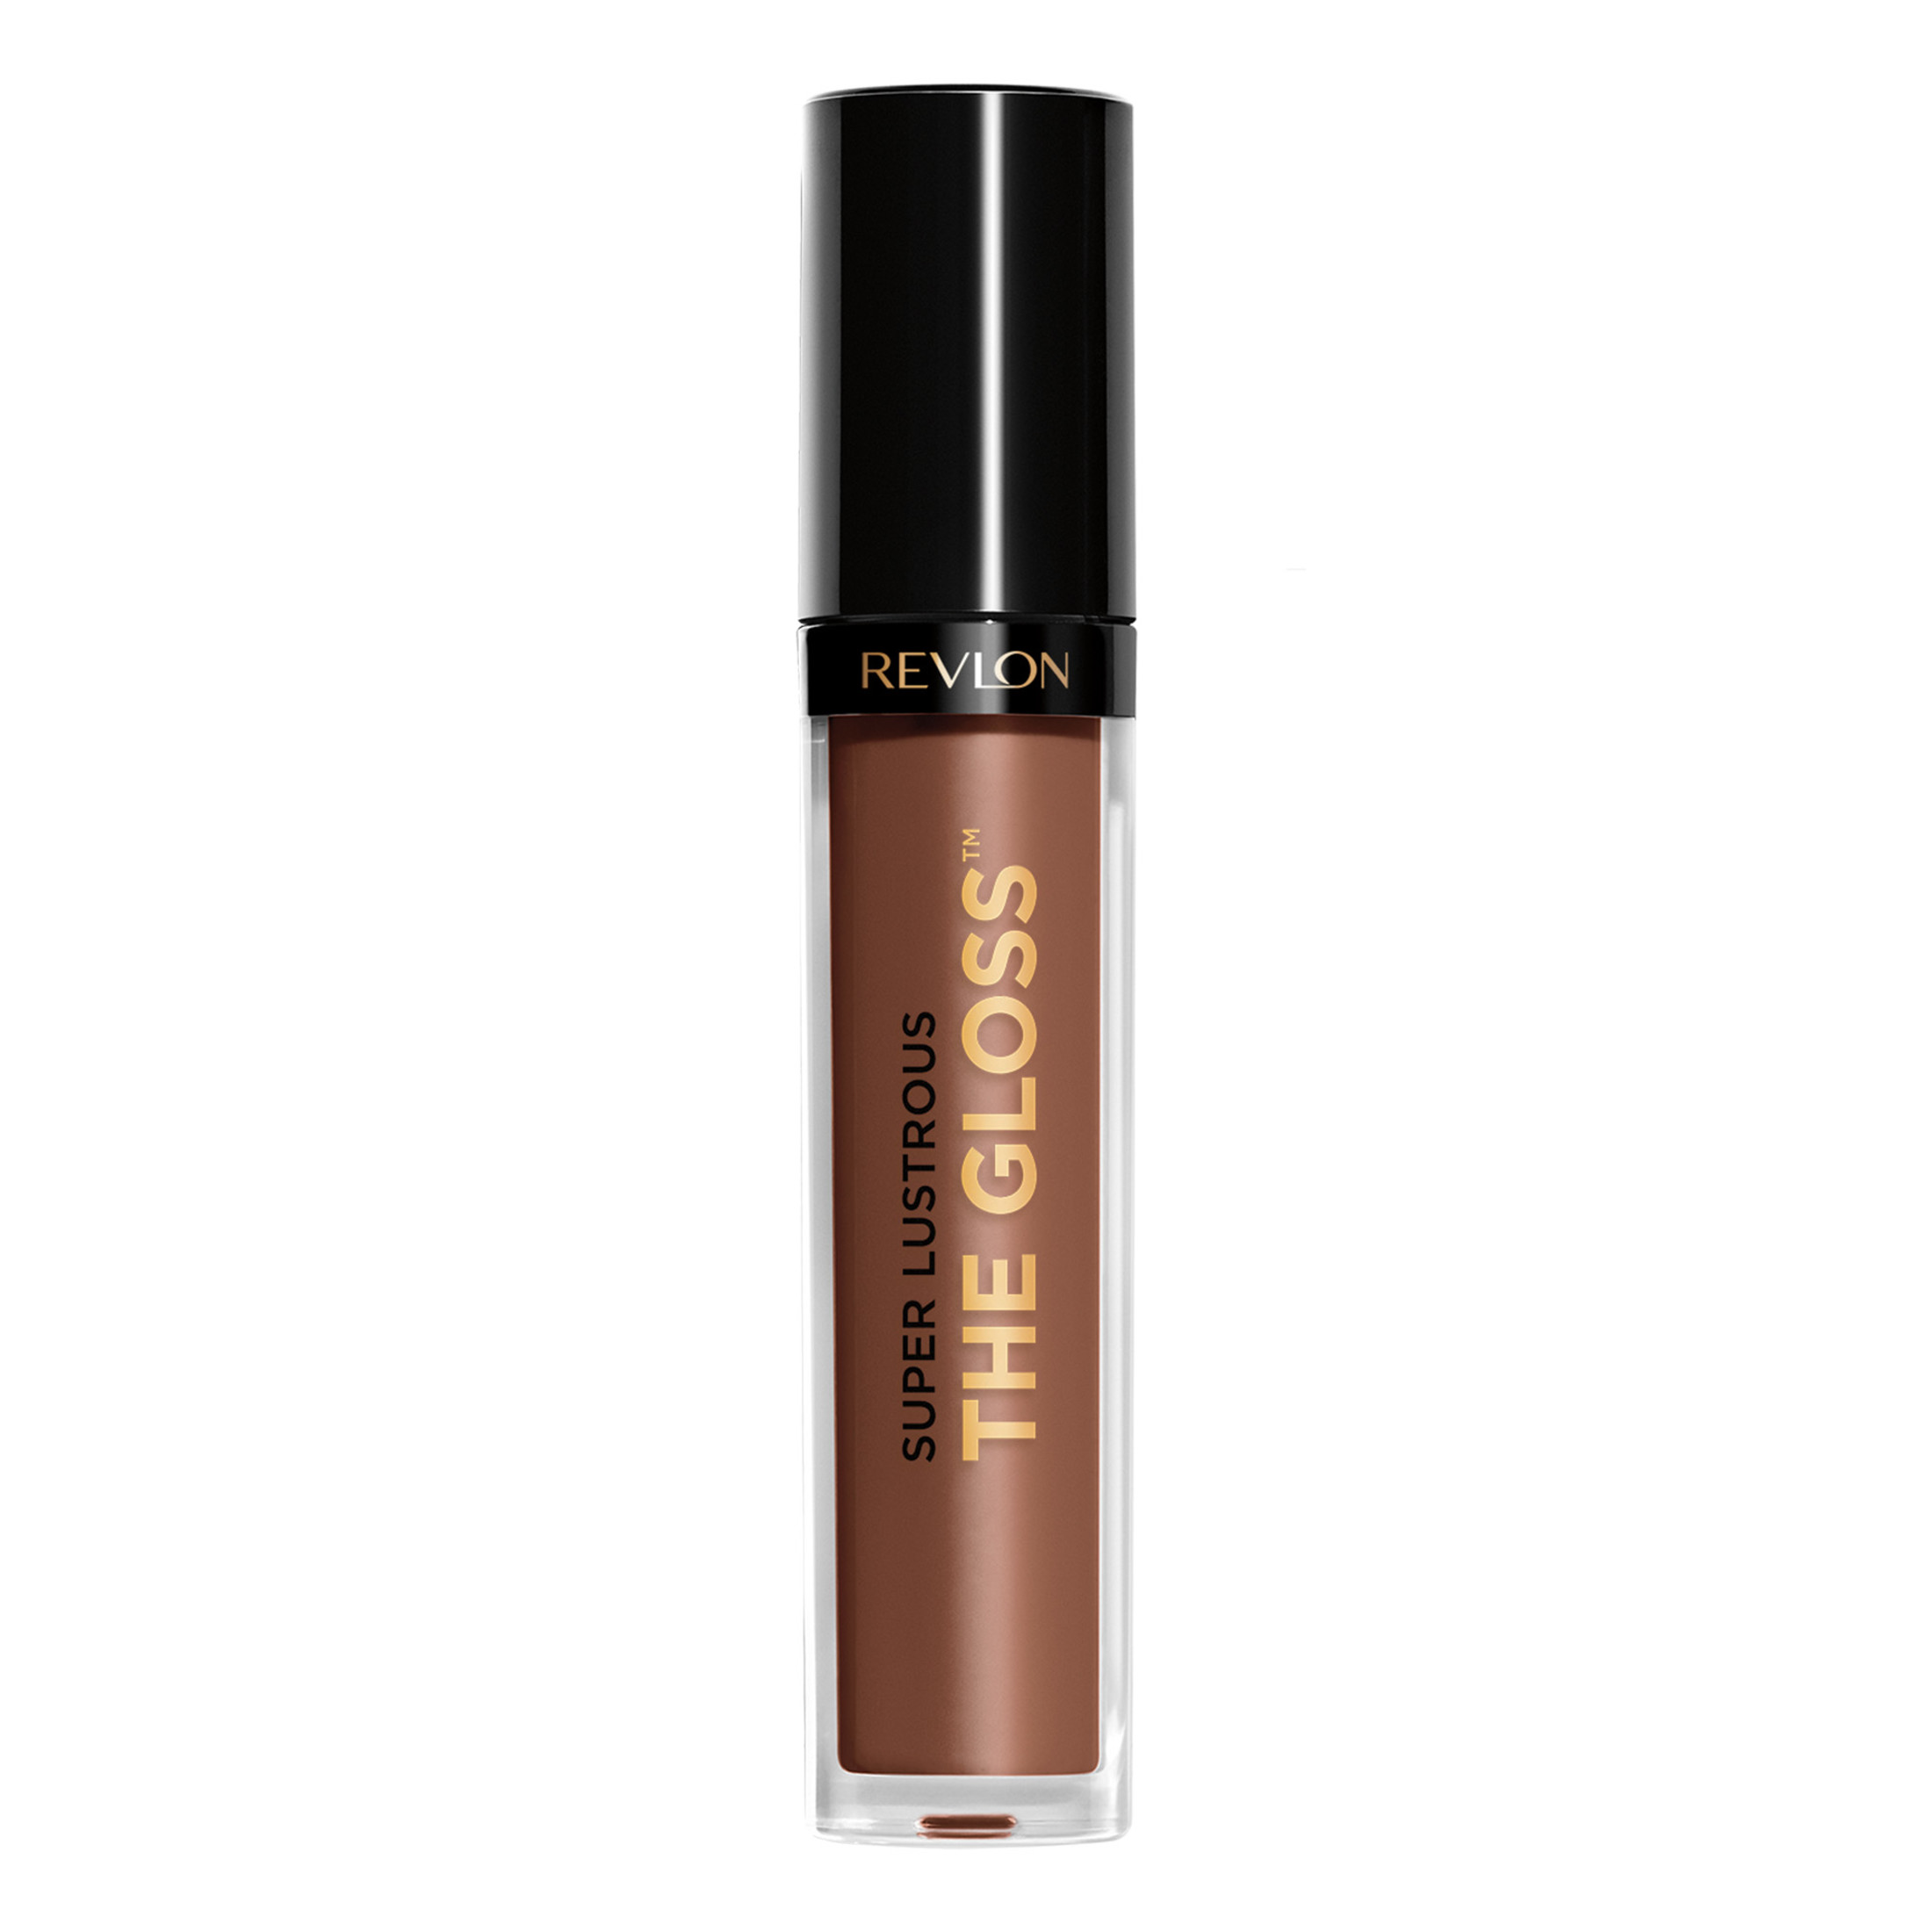 Revlon Super Lustrous Moisturizing High Shine Lip Gloss, 310 Choco Crush, 0.13 oz - image 1 of 9